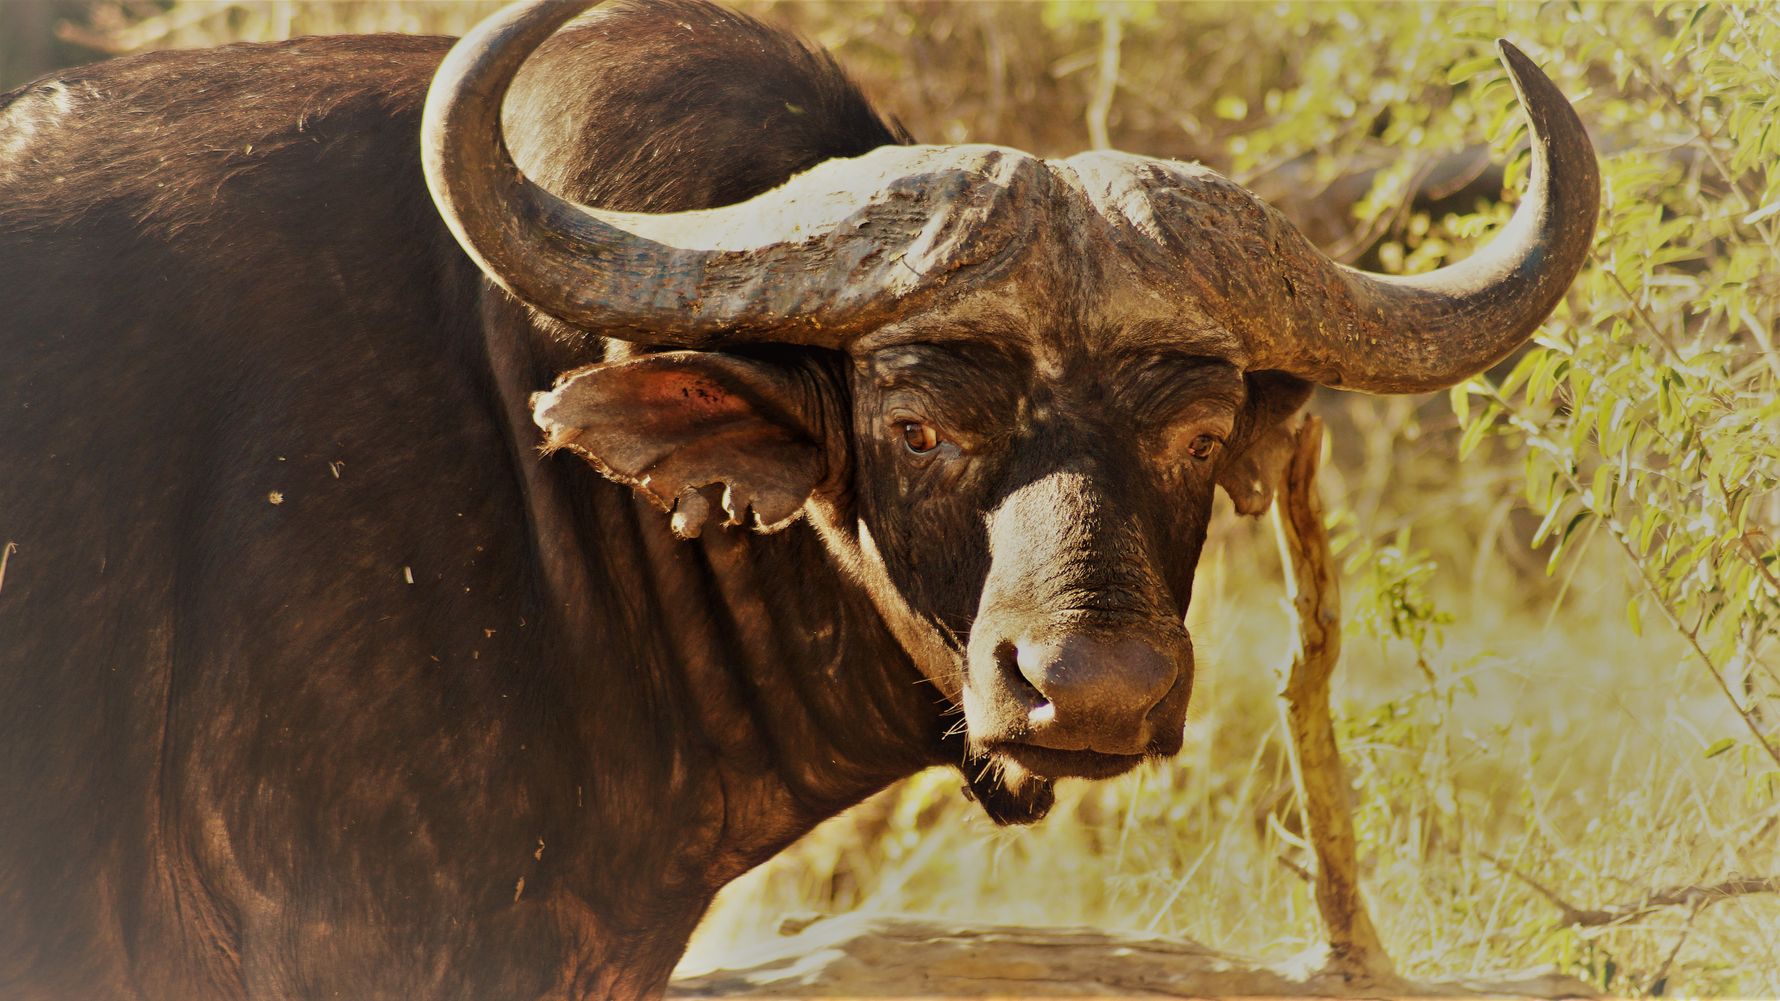 Natucate Blog – African Buffalo ⋅ Natucate